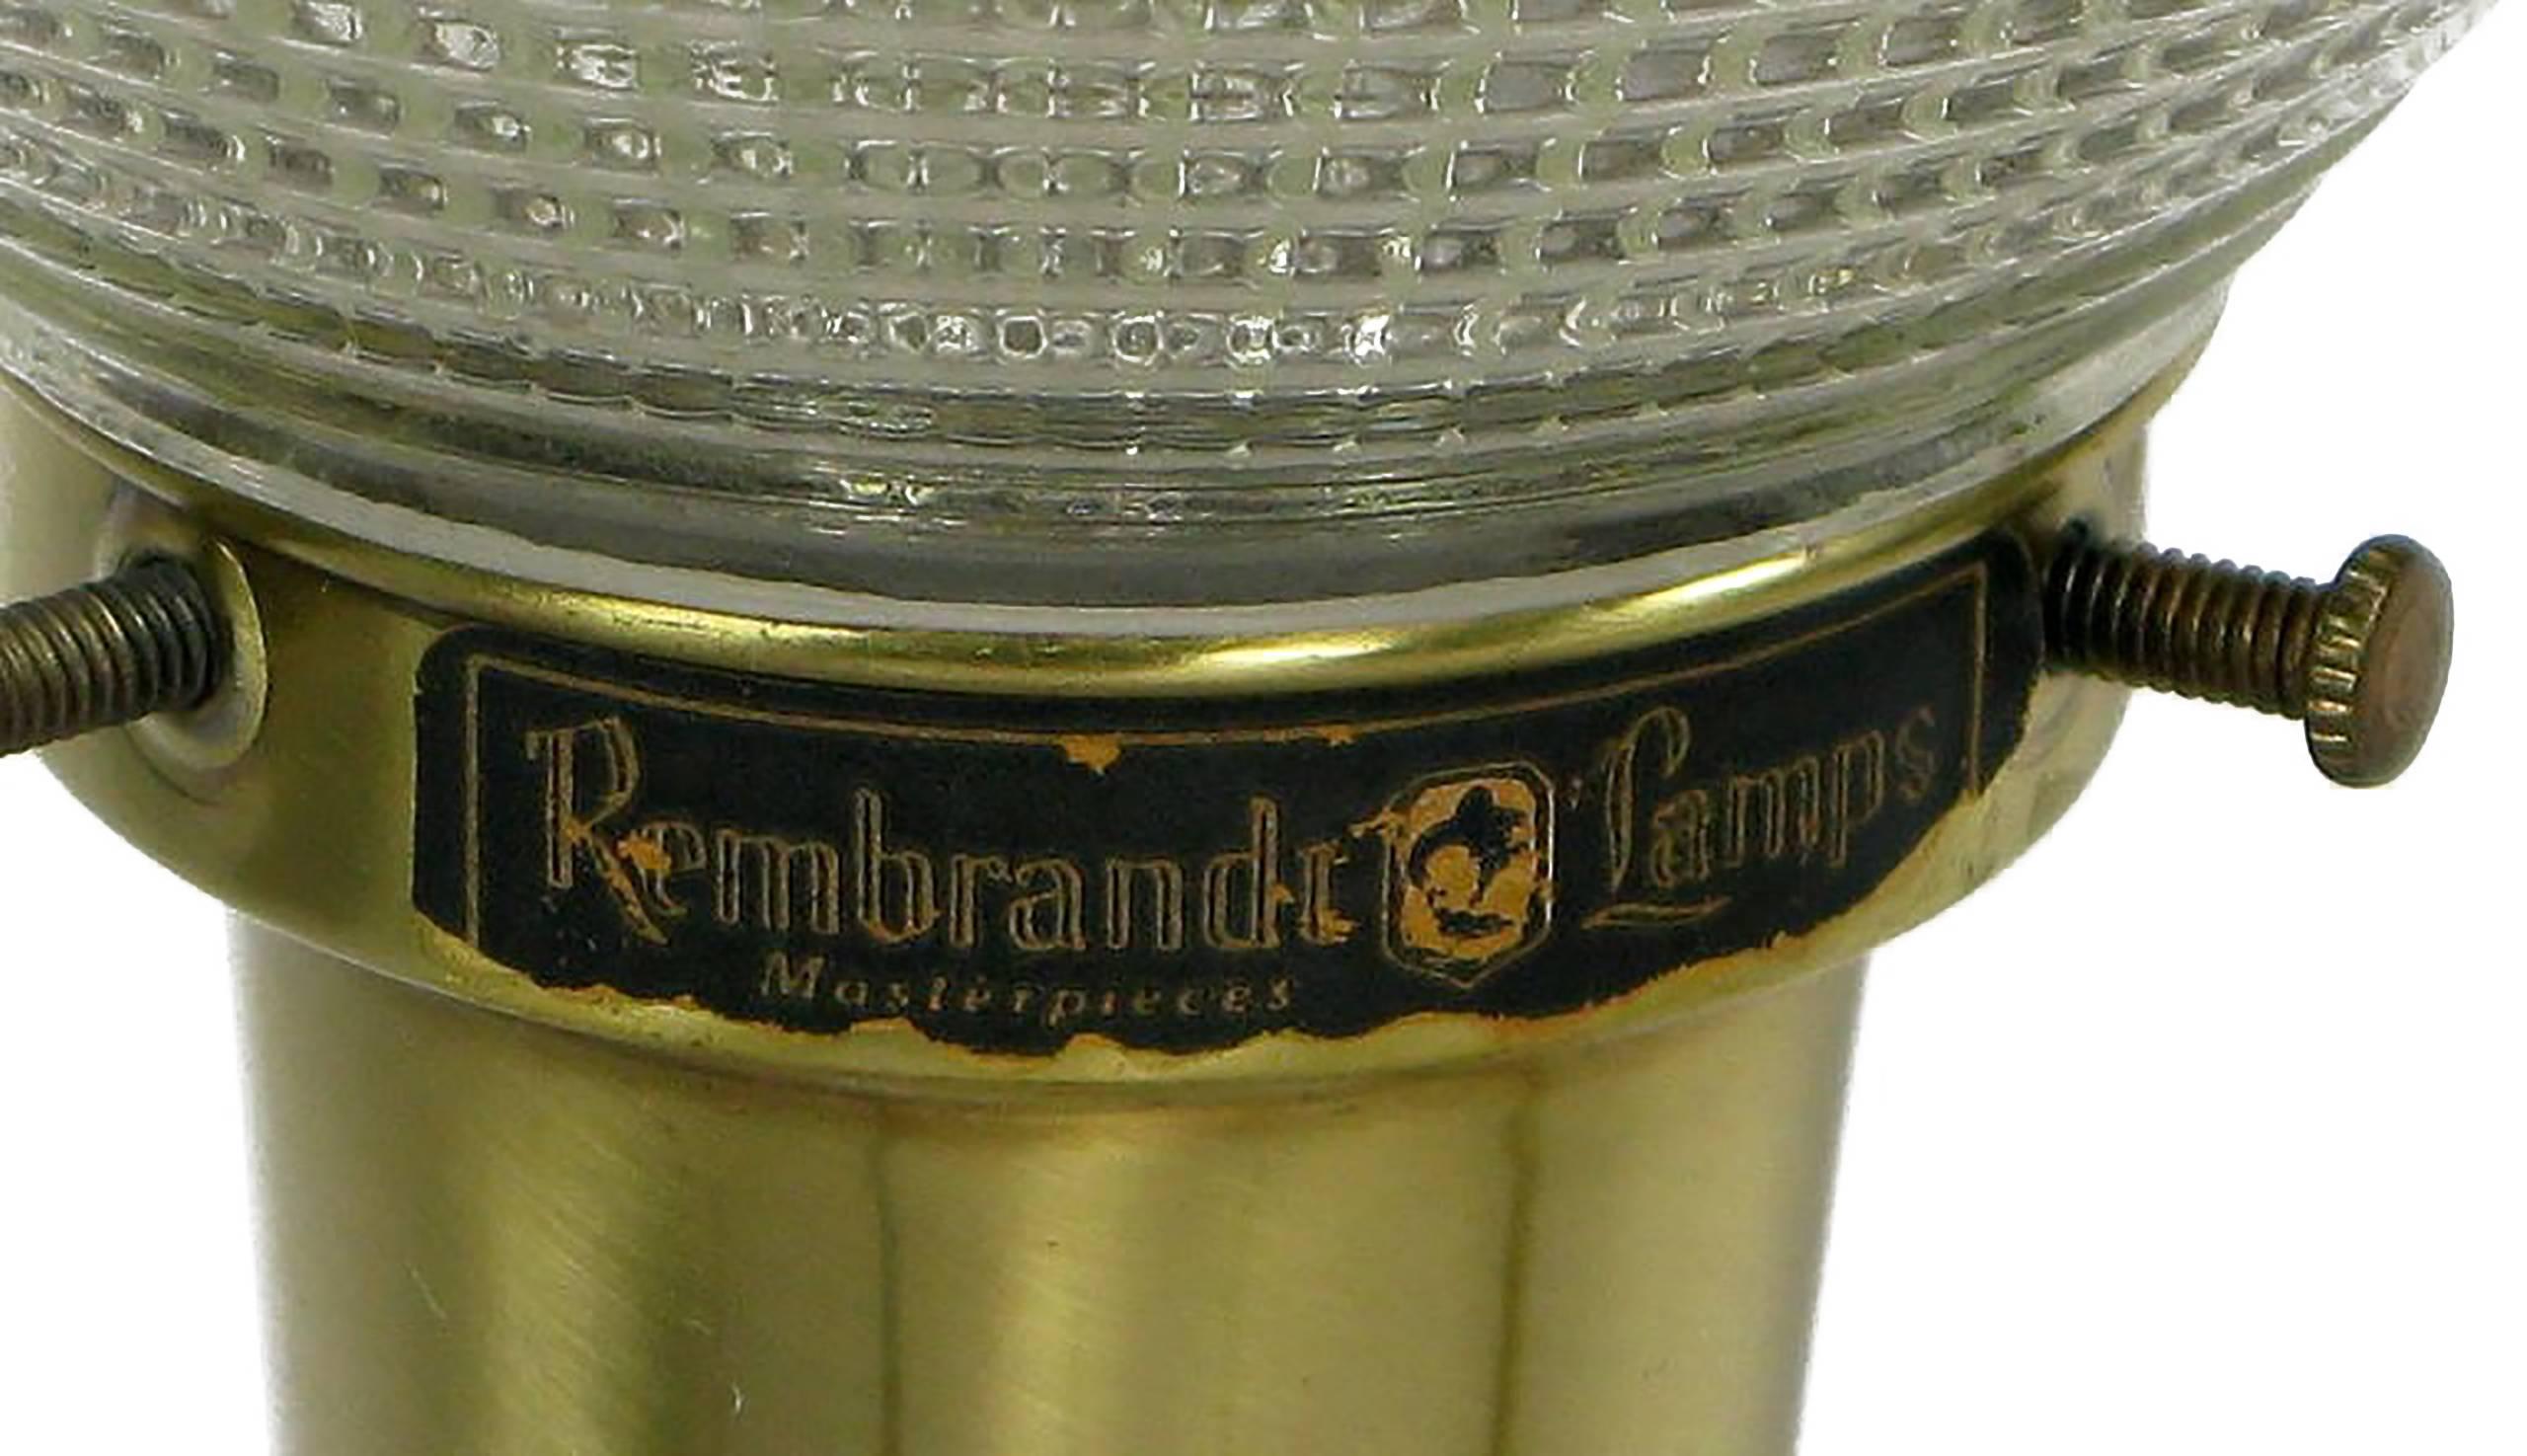 vintage rembrandt lamps